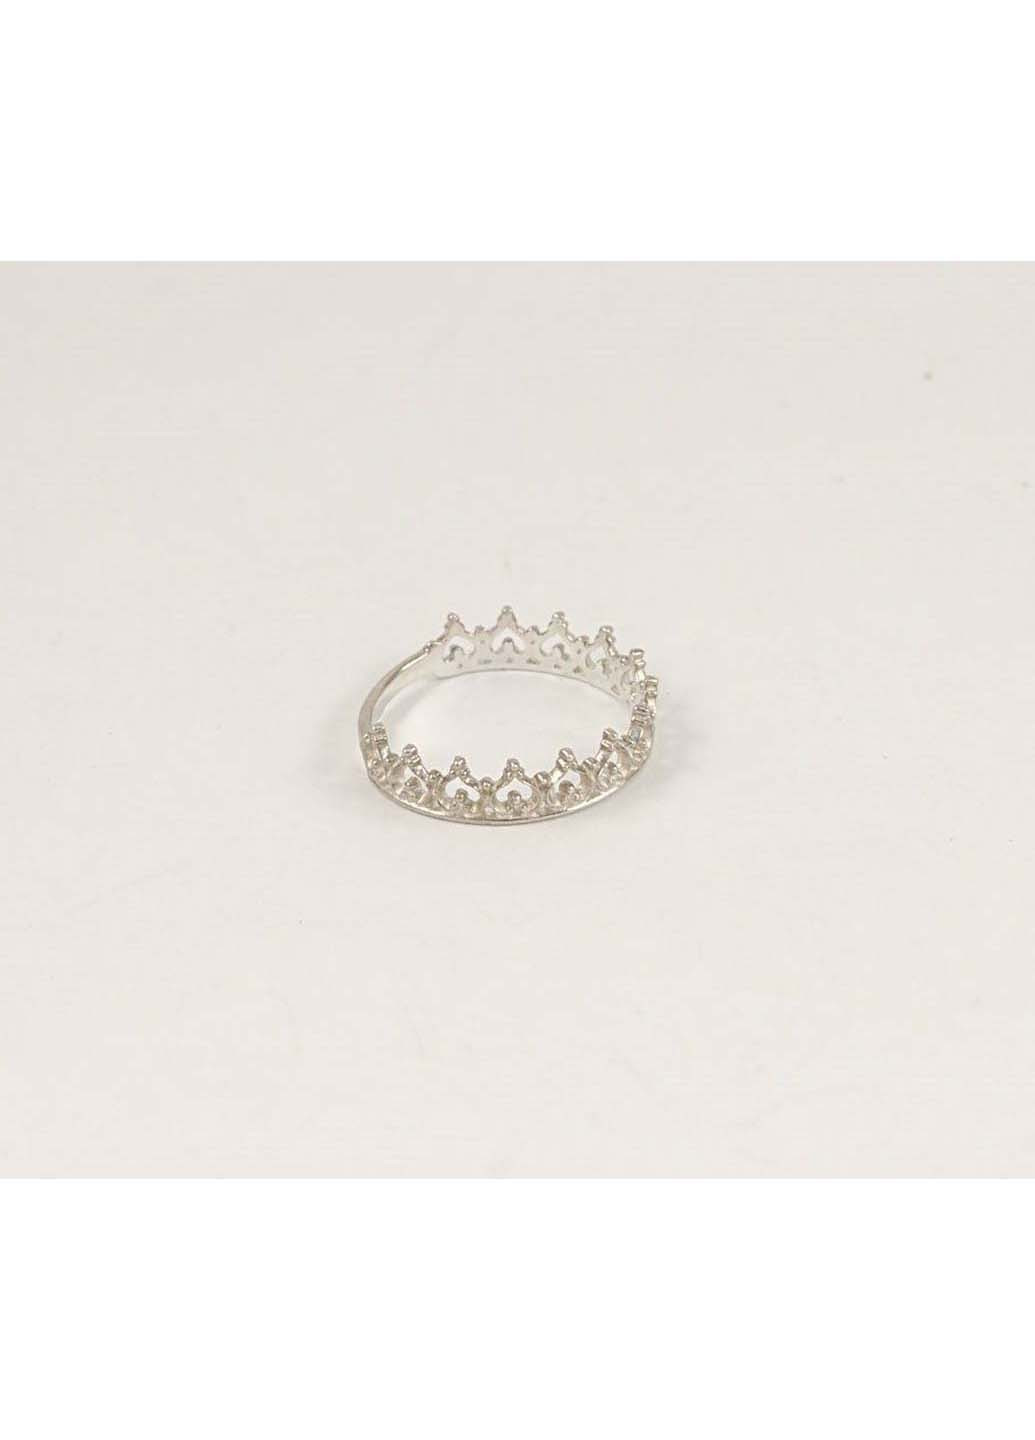 Кольцо корона узорная 6222 SE Maxi Silver (277751226)